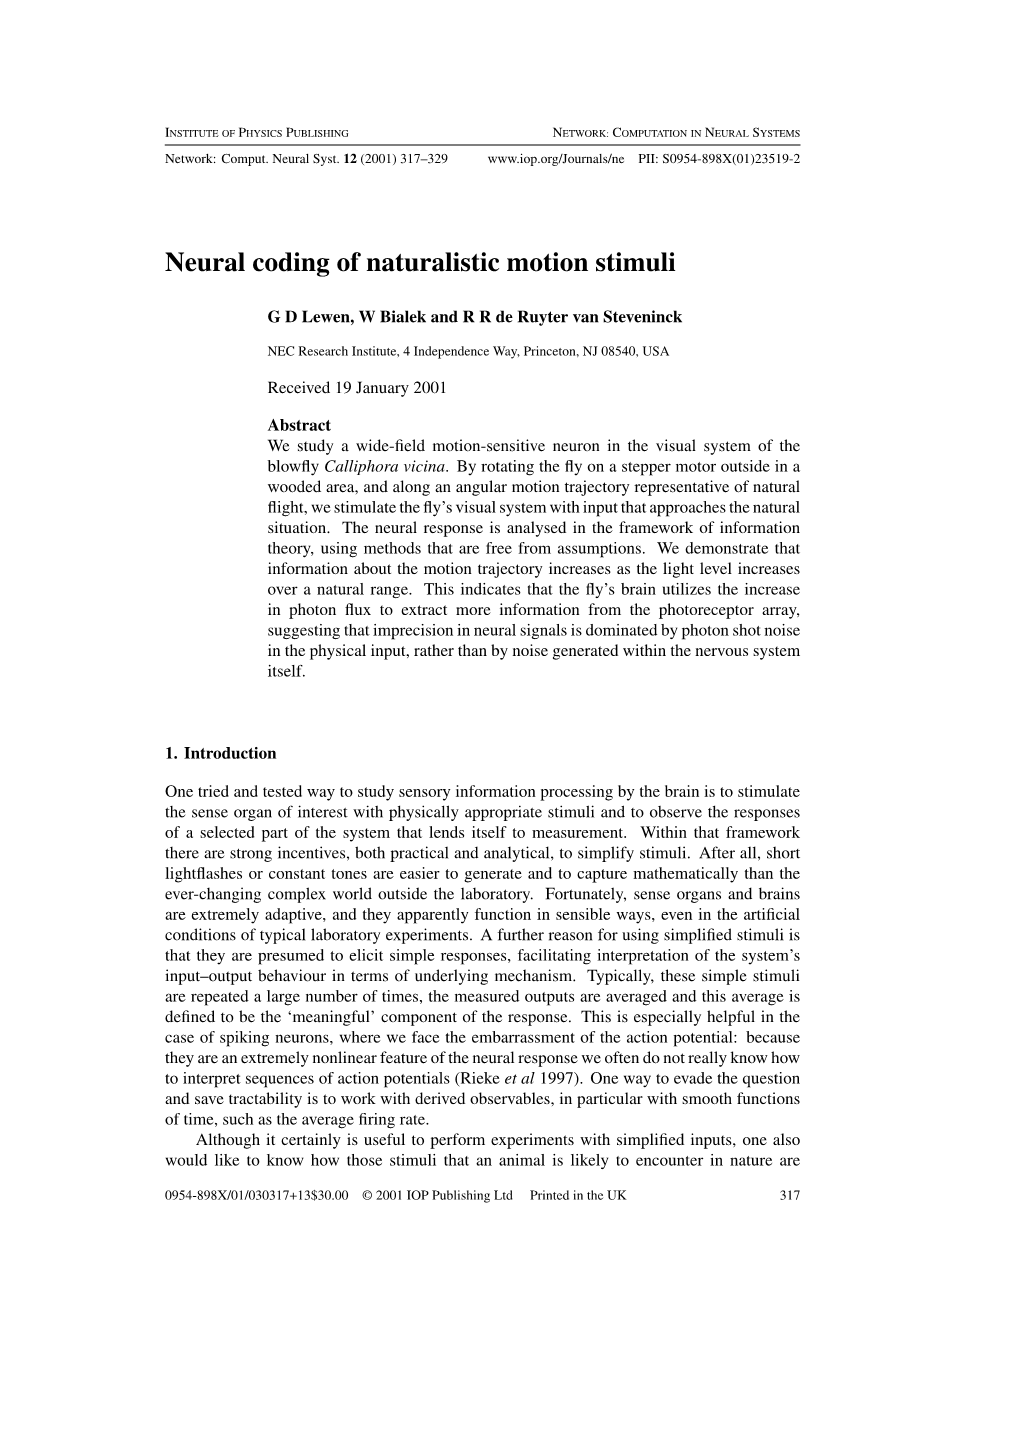 Neural Coding of Naturalistic Motion Stimuli